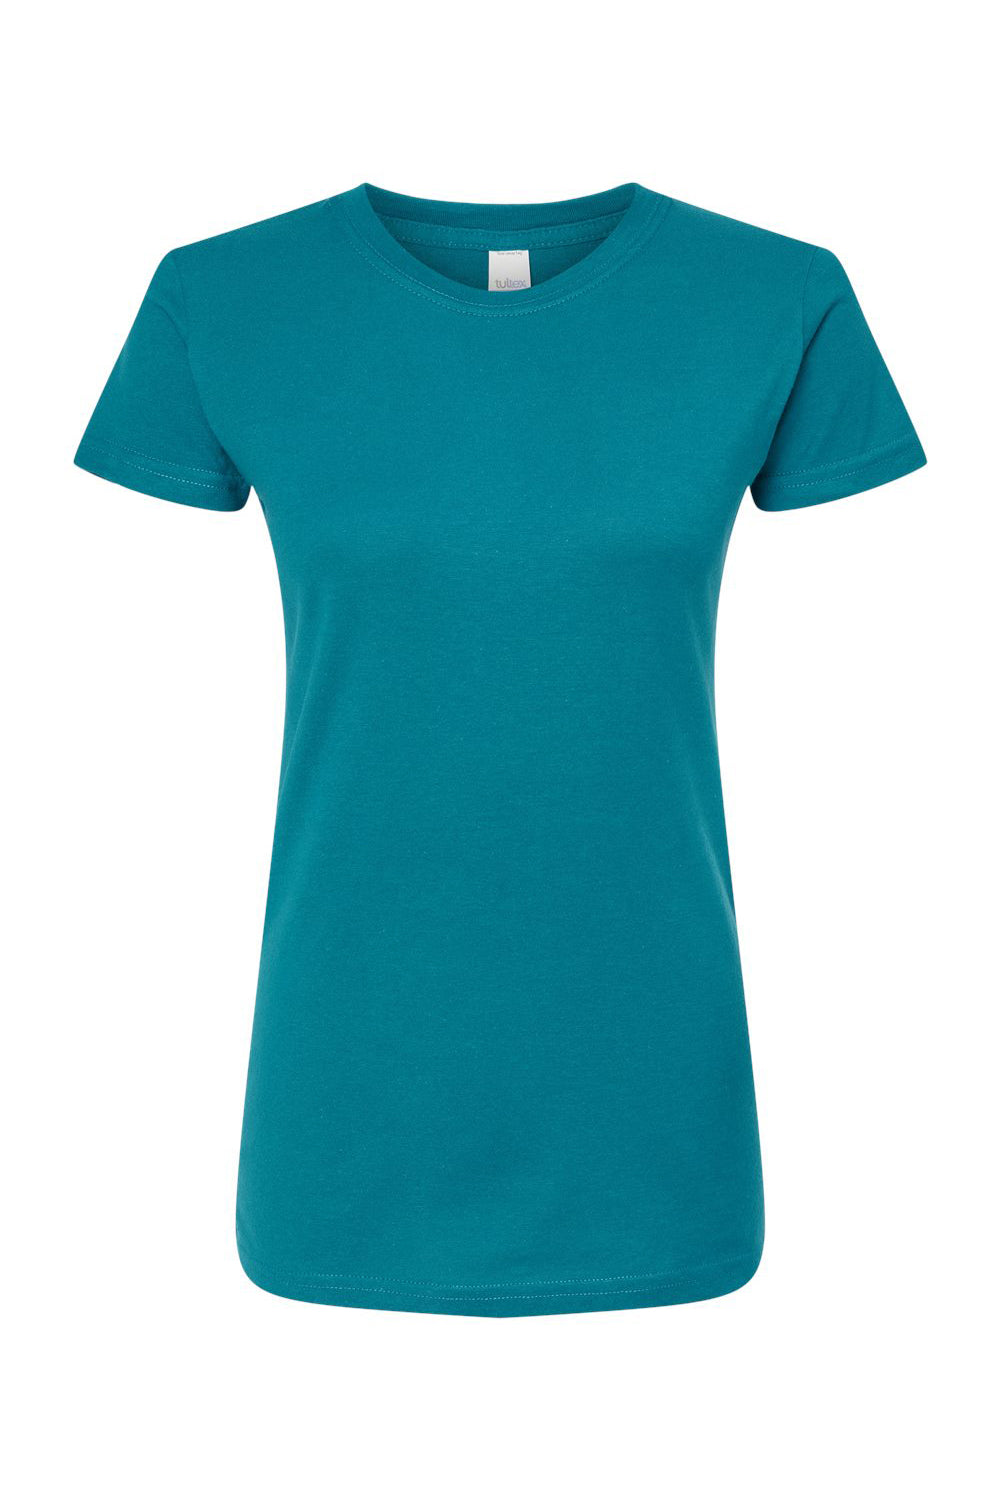 Tultex 213 Womens Fine Jersey Slim Fit Short Sleeve Crewneck T-Shirt Teal Blue Flat Front